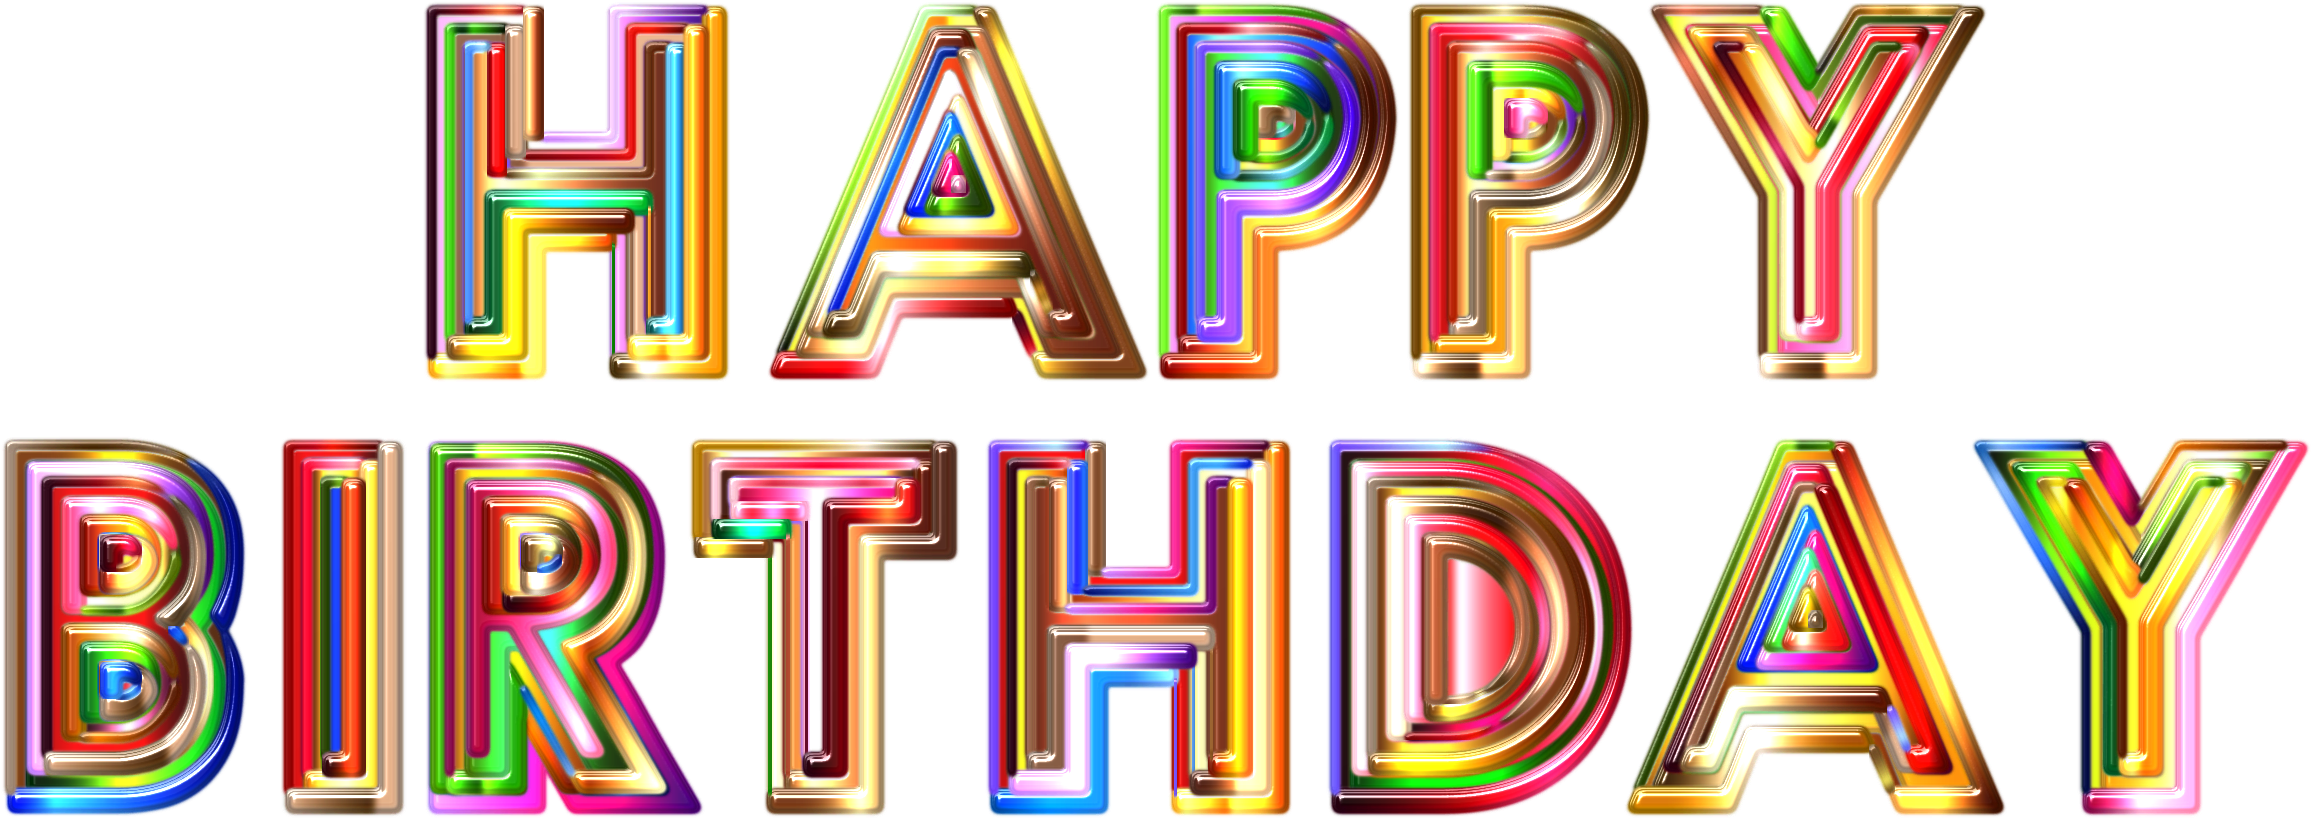 Birthday Design png download - 798*1144 - Free Transparent 3rd Birthday png  Download. - CleanPNG / KissPNG